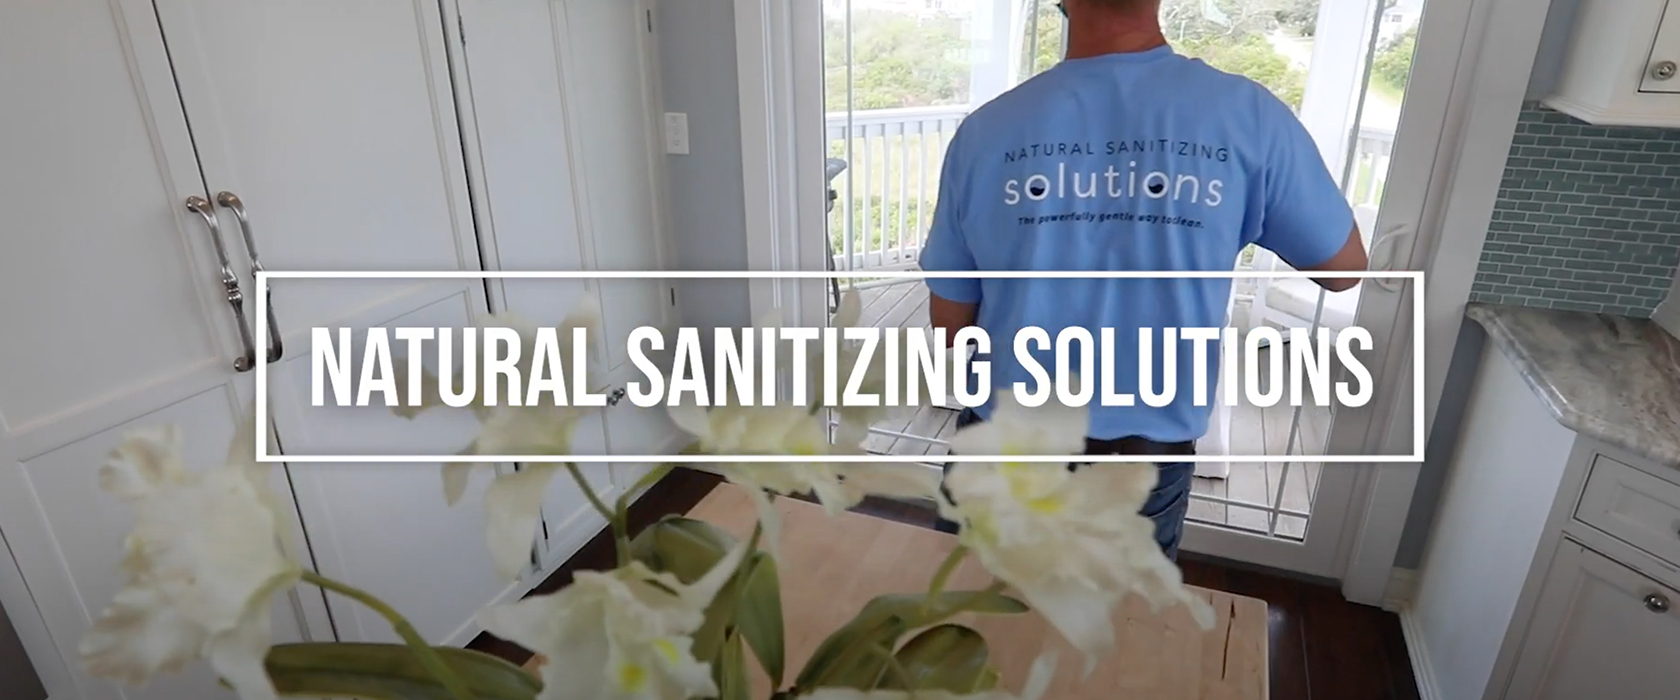 Natural Sanitizing Solutions